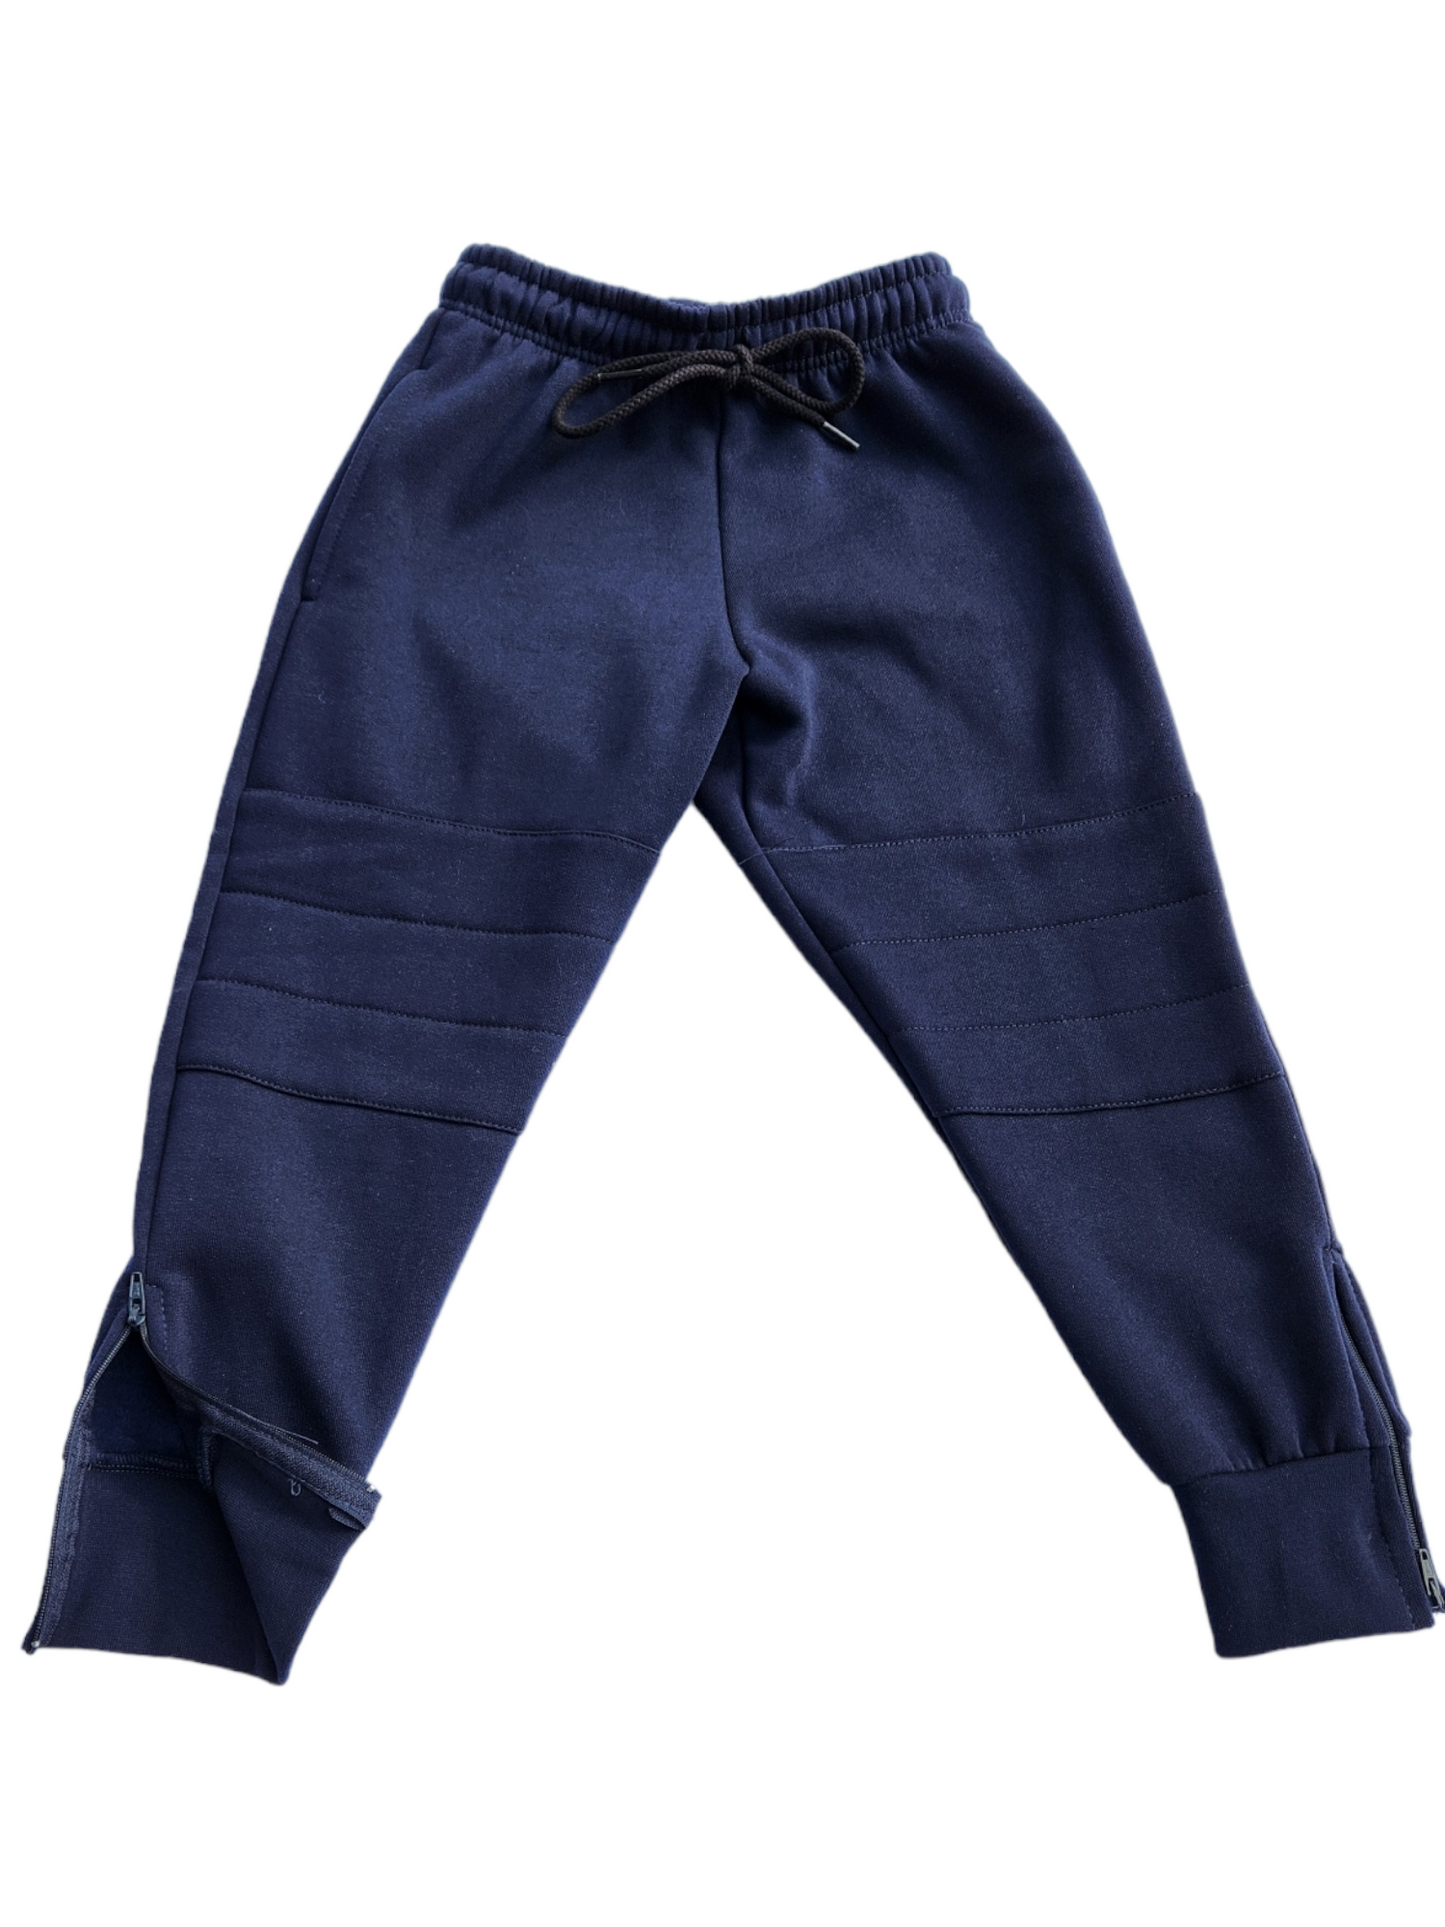 Navy Blue Track Pants, Track Pants Online Australia